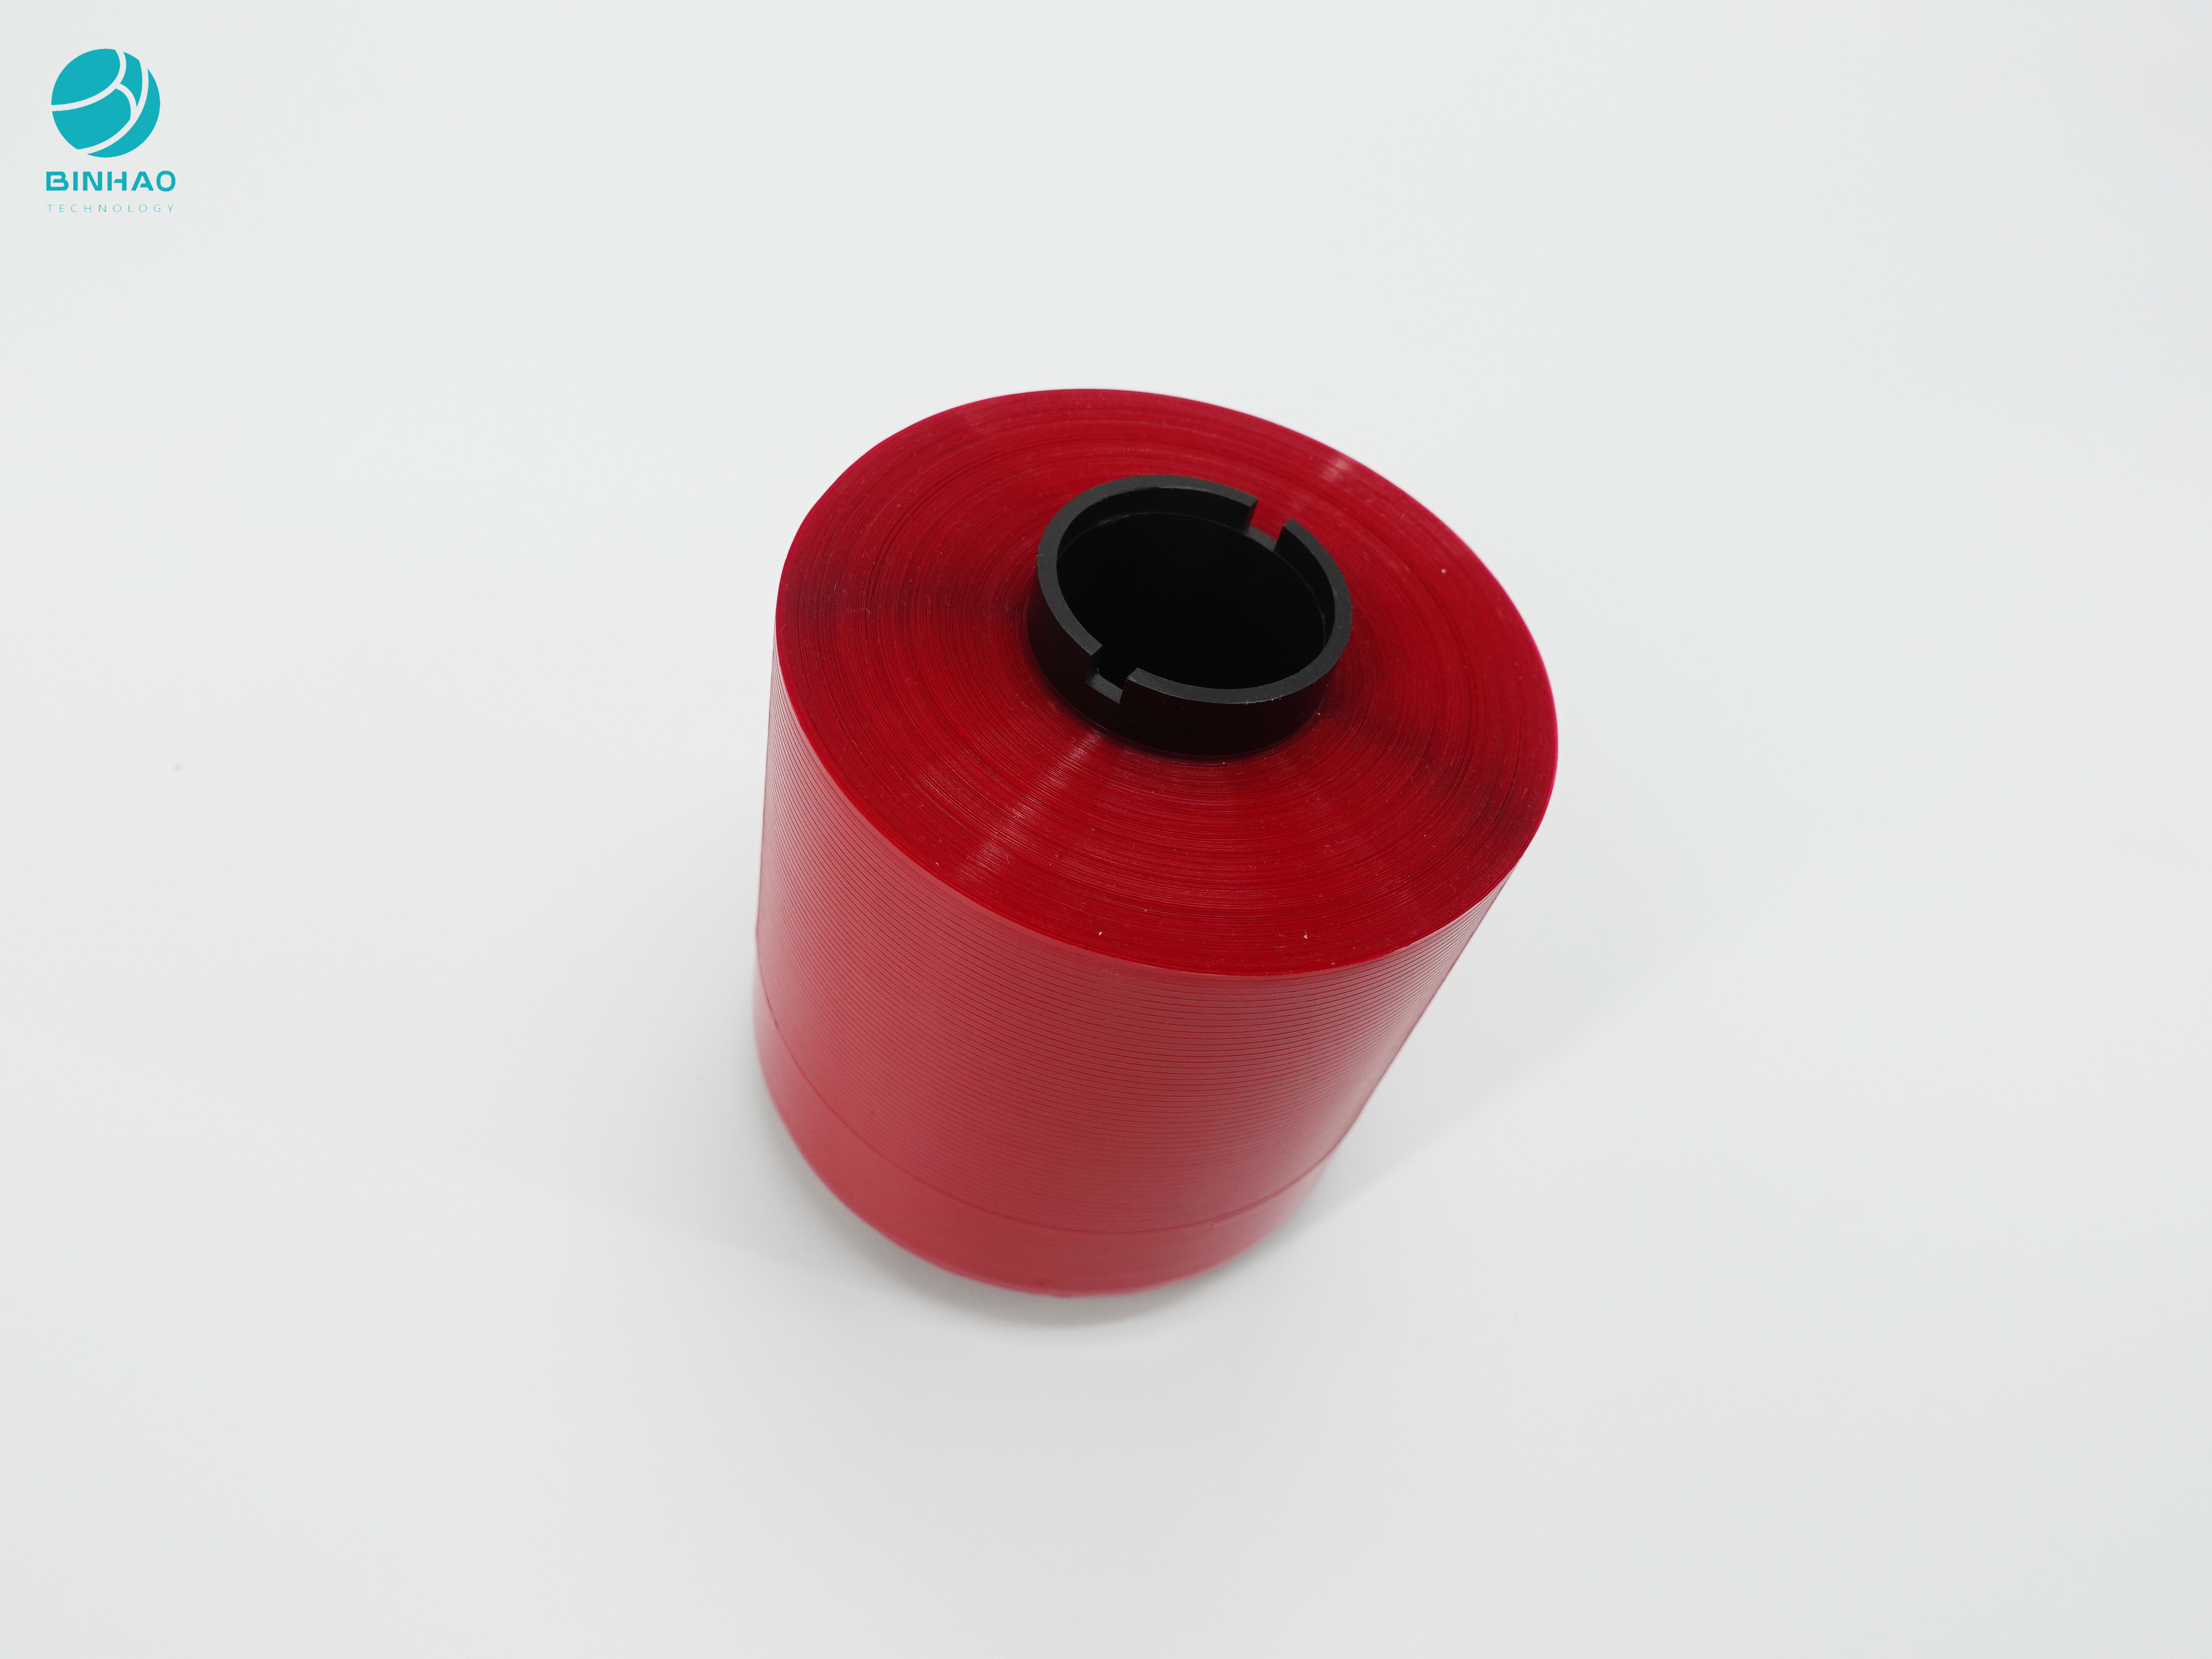 Cinta auta-adhesivo impermeable Rolls 2.5m m del rasgón olográficos para la caja de embalaje